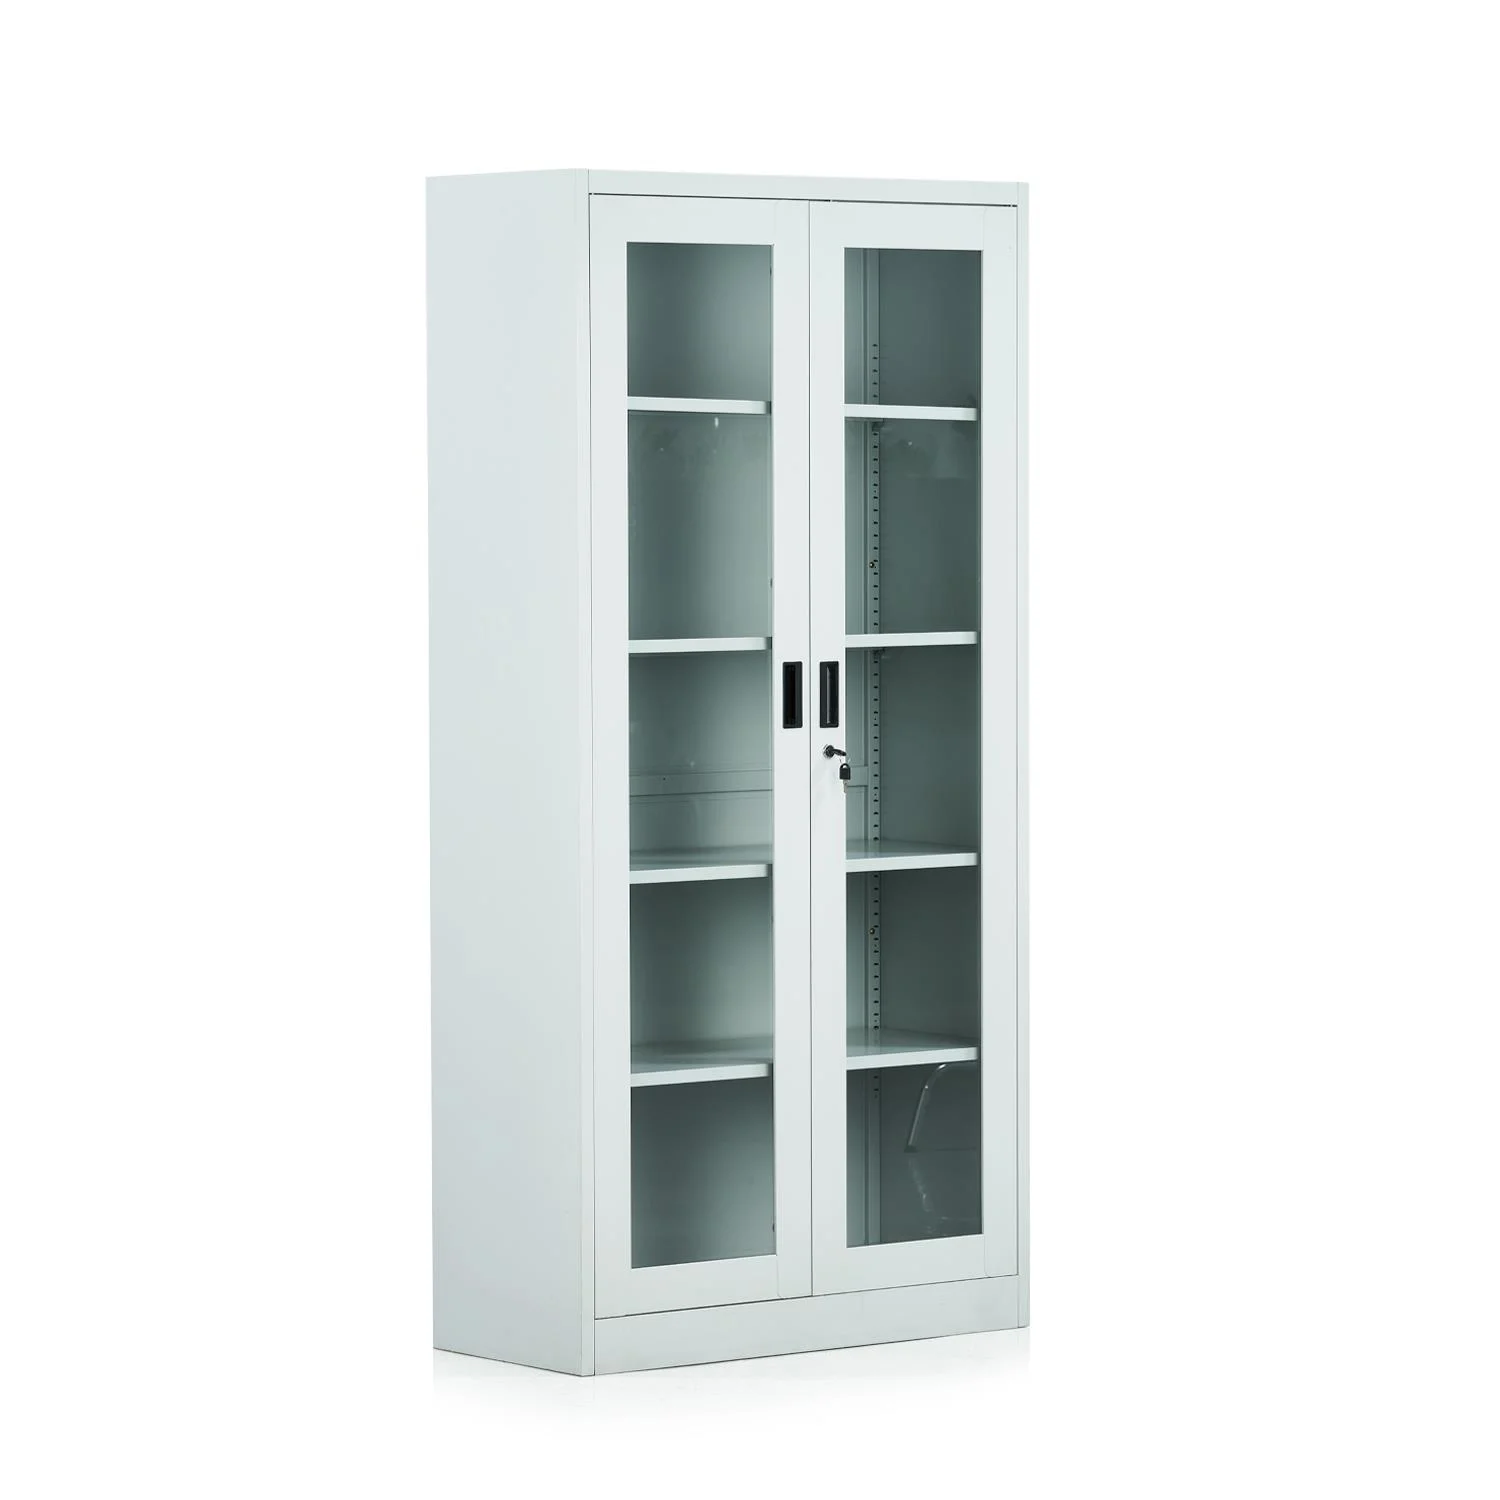 Cupboard KD-036 Swing Glass Door With Four Shelves